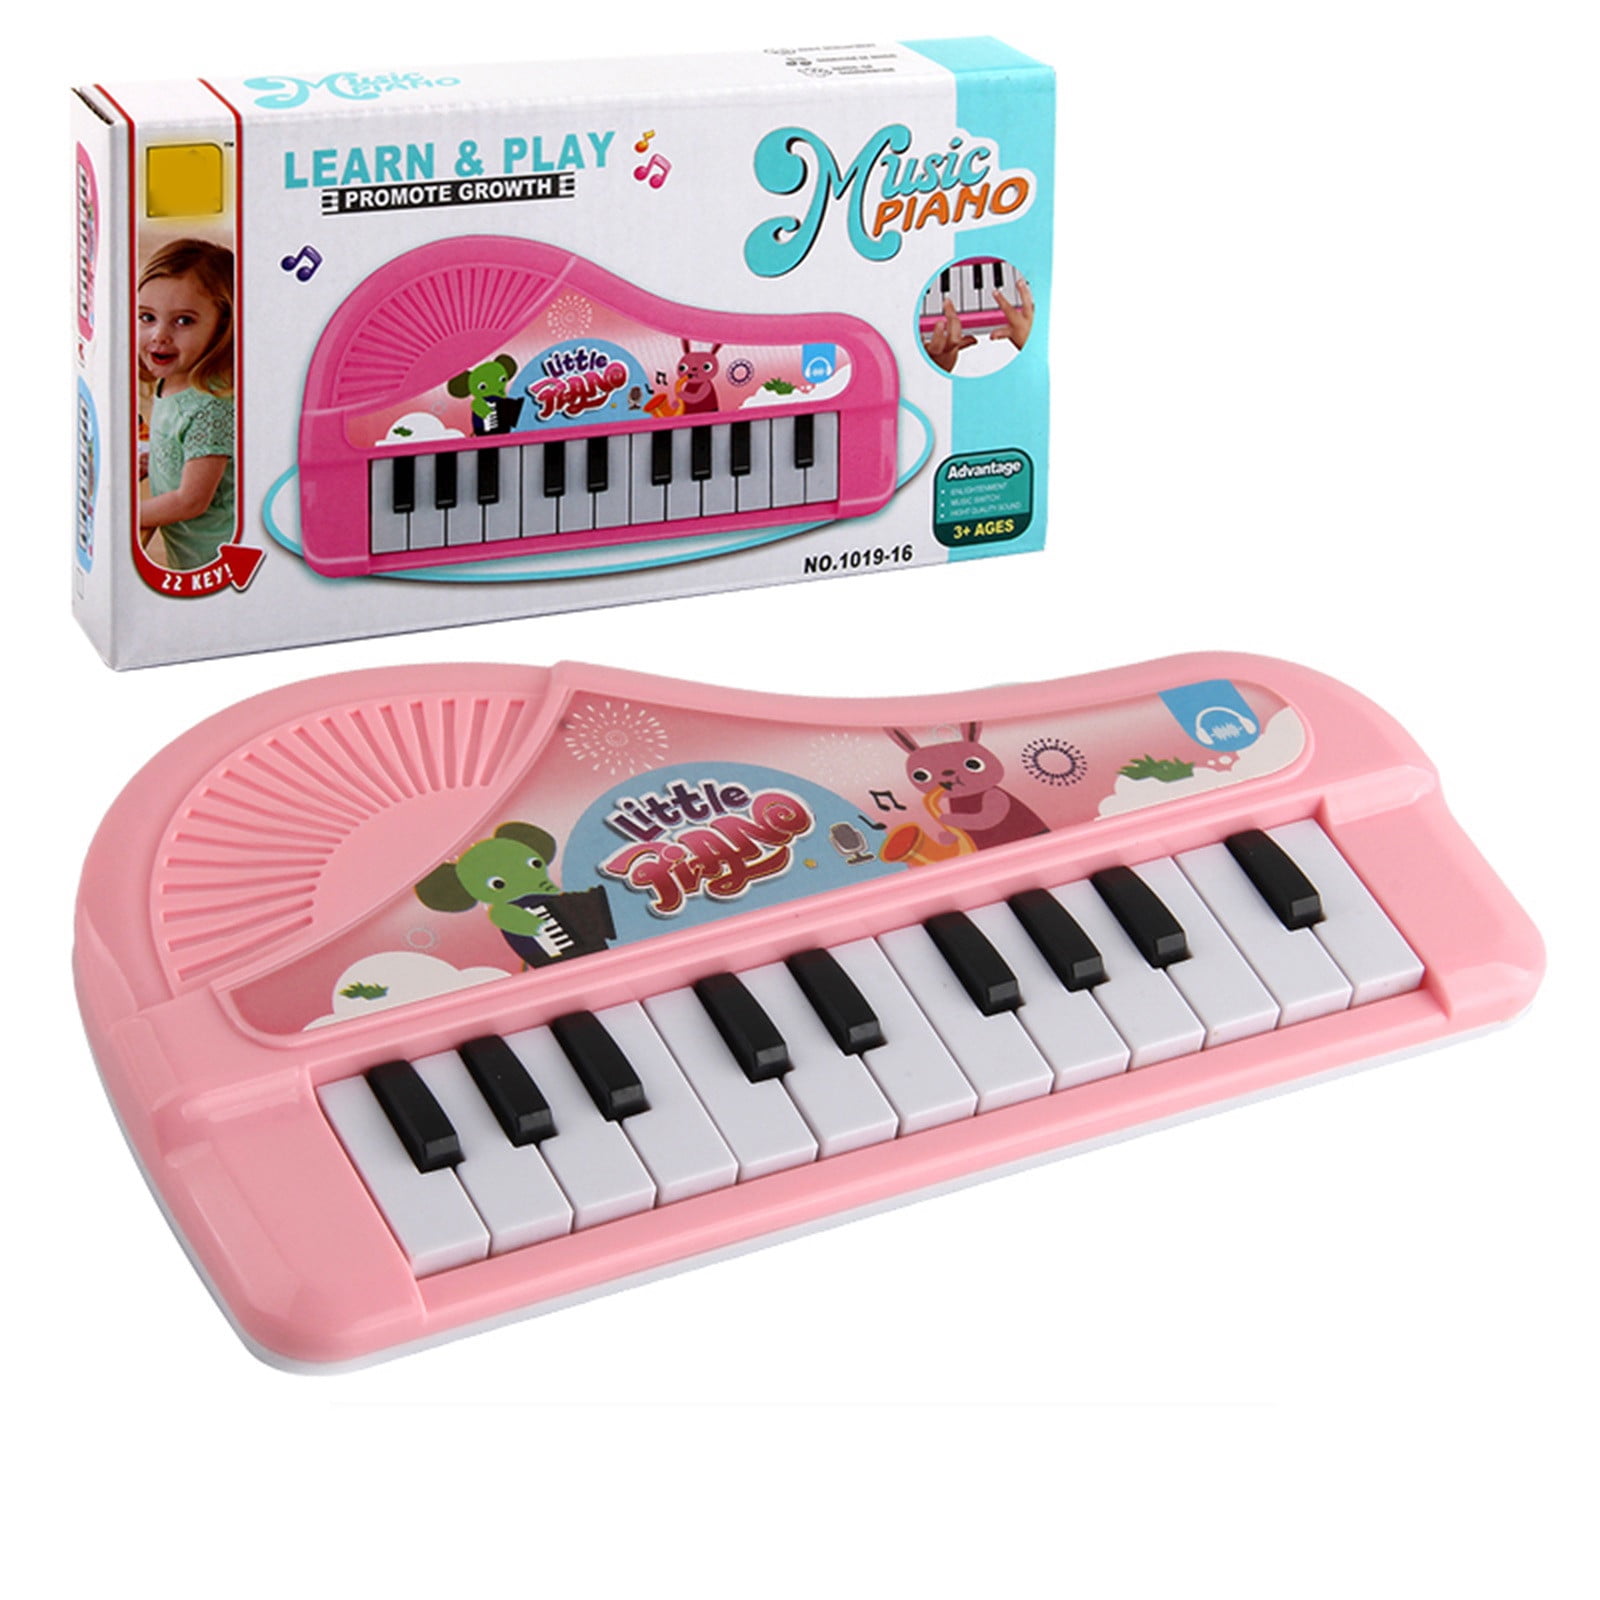 22 Keys Piano Keyboard Kid's Musical Toy For Girls Boys Birthday Christmas Gift 